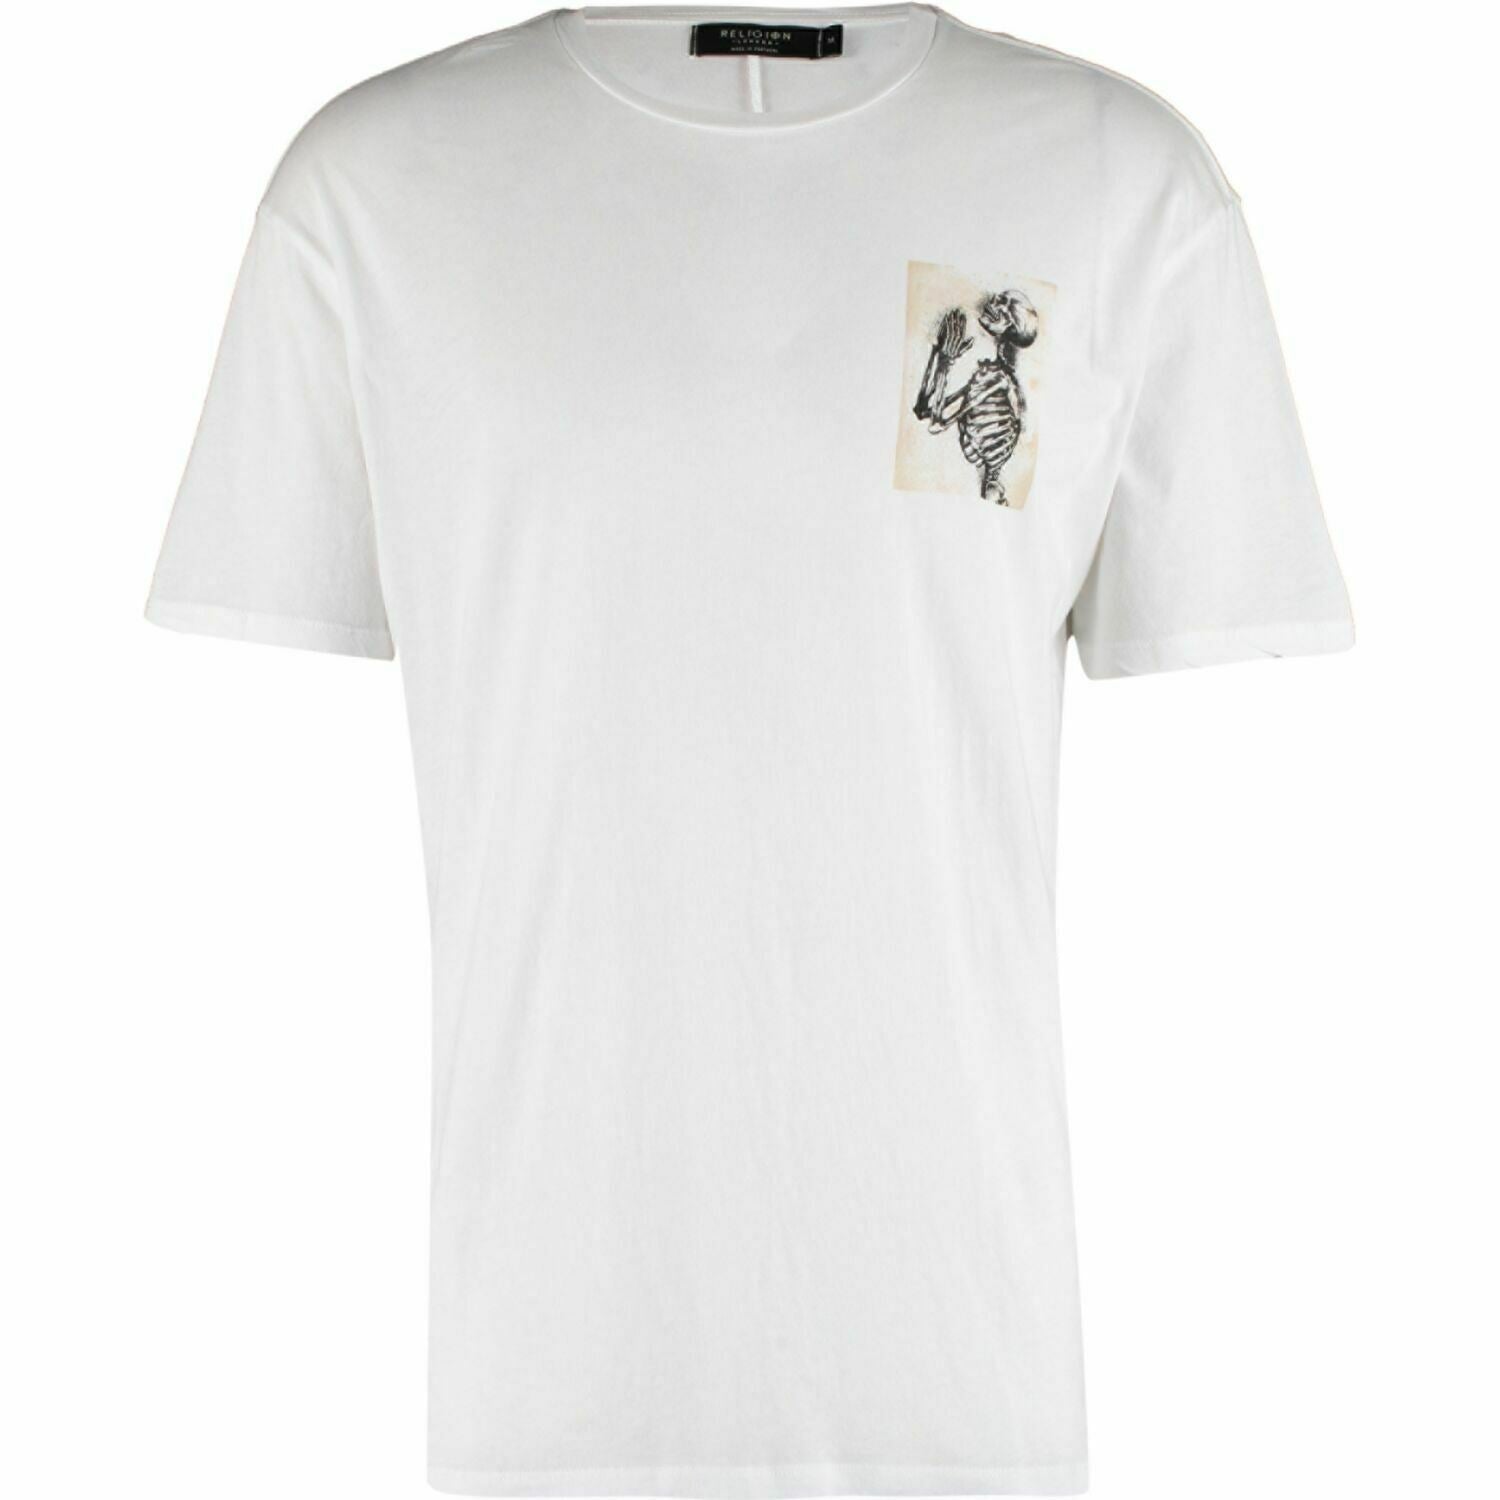 RELIGION Men's White & Chest Logo T-Shirt Top, size M